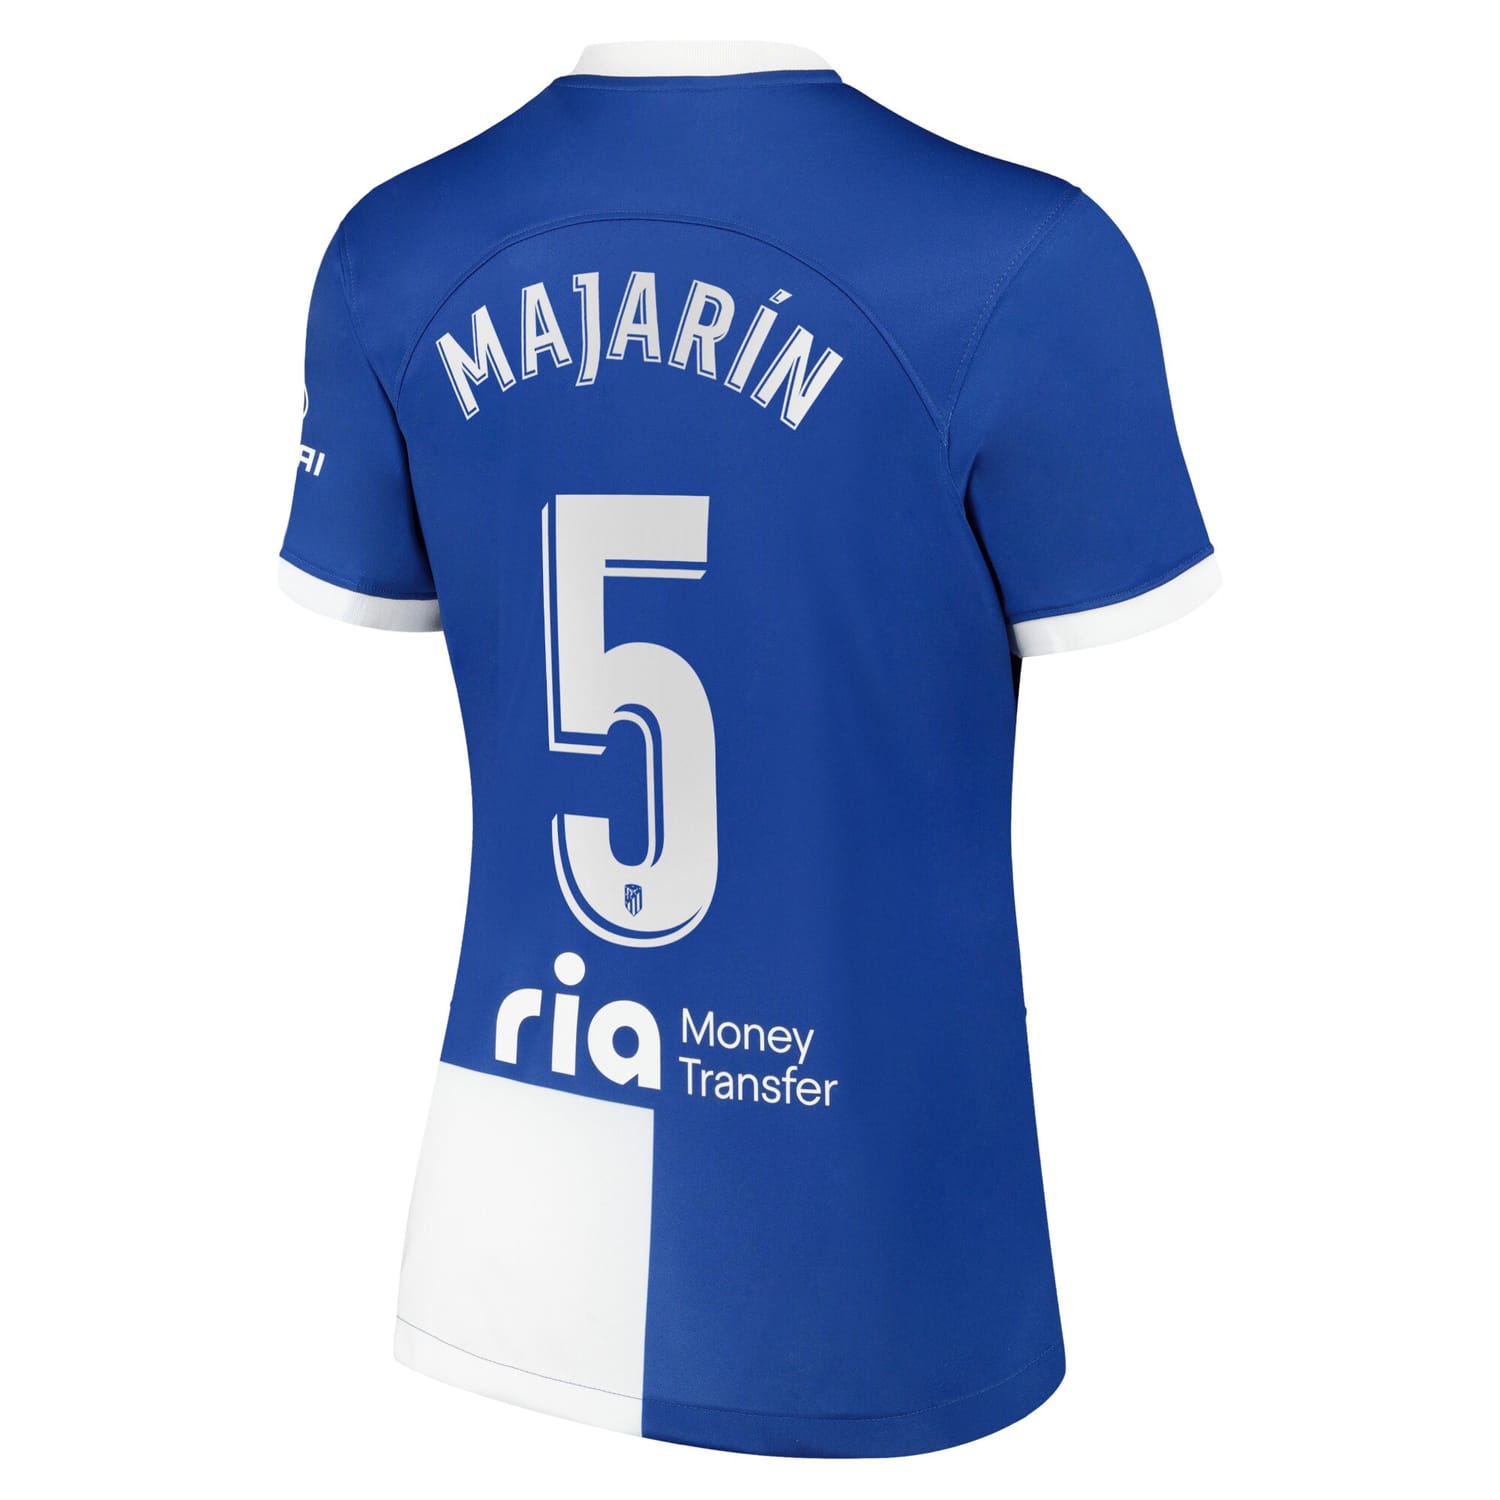 La Liga Atletico de Madrid Jersey Shirt 2022-23 player Sonia García Majarín 5 printing for Women